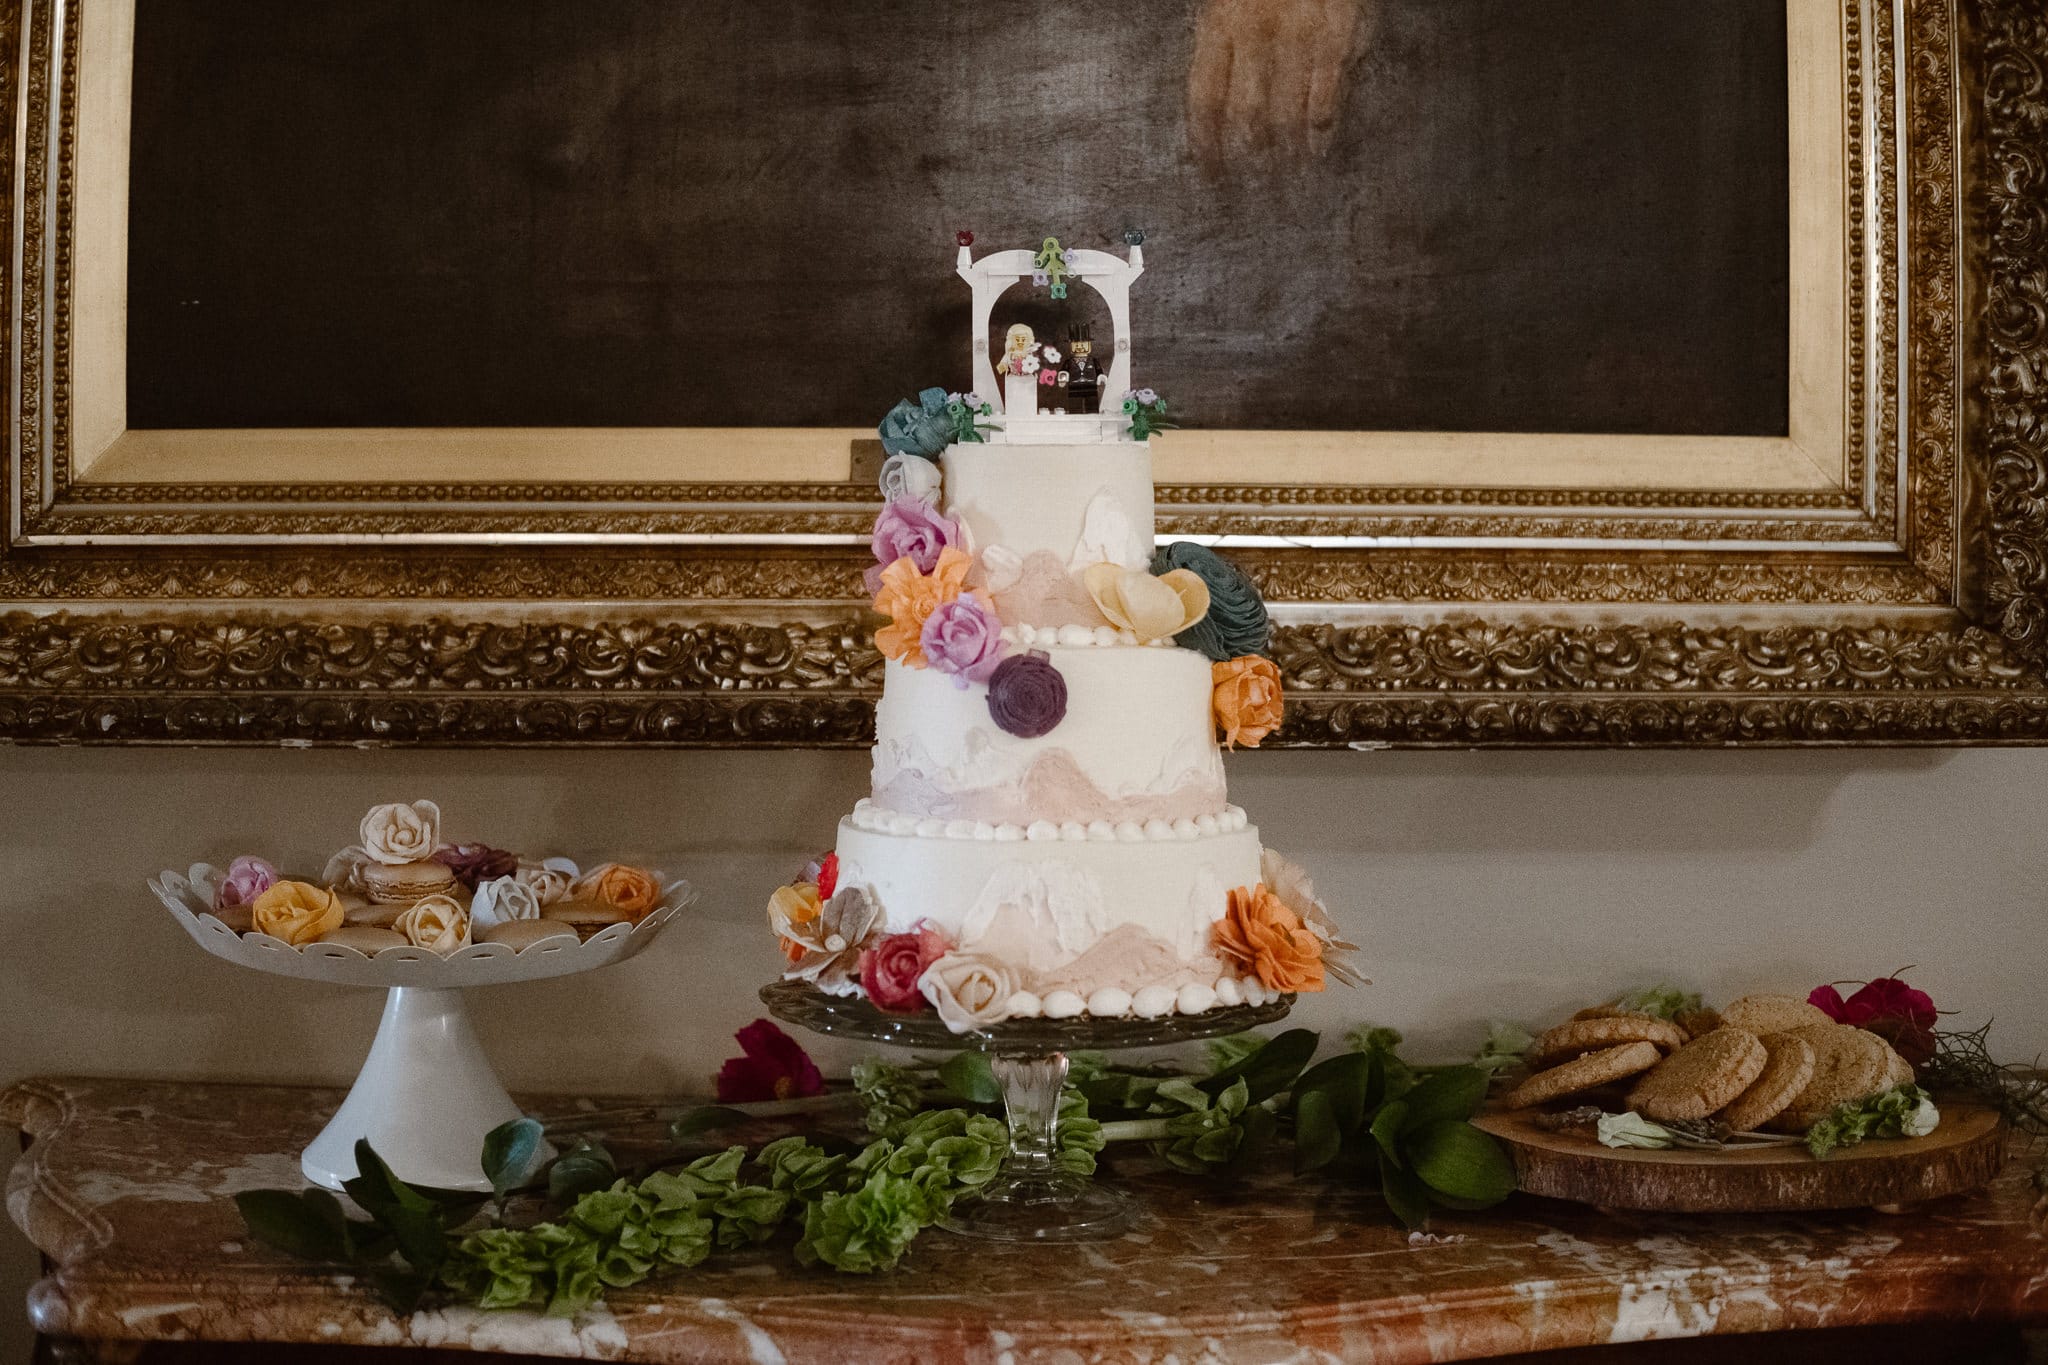 Grant Humphreys Mansion Wedding Photographer, Denver wedding photographer, Colorado wedding photographer, wedding cake with lego figures